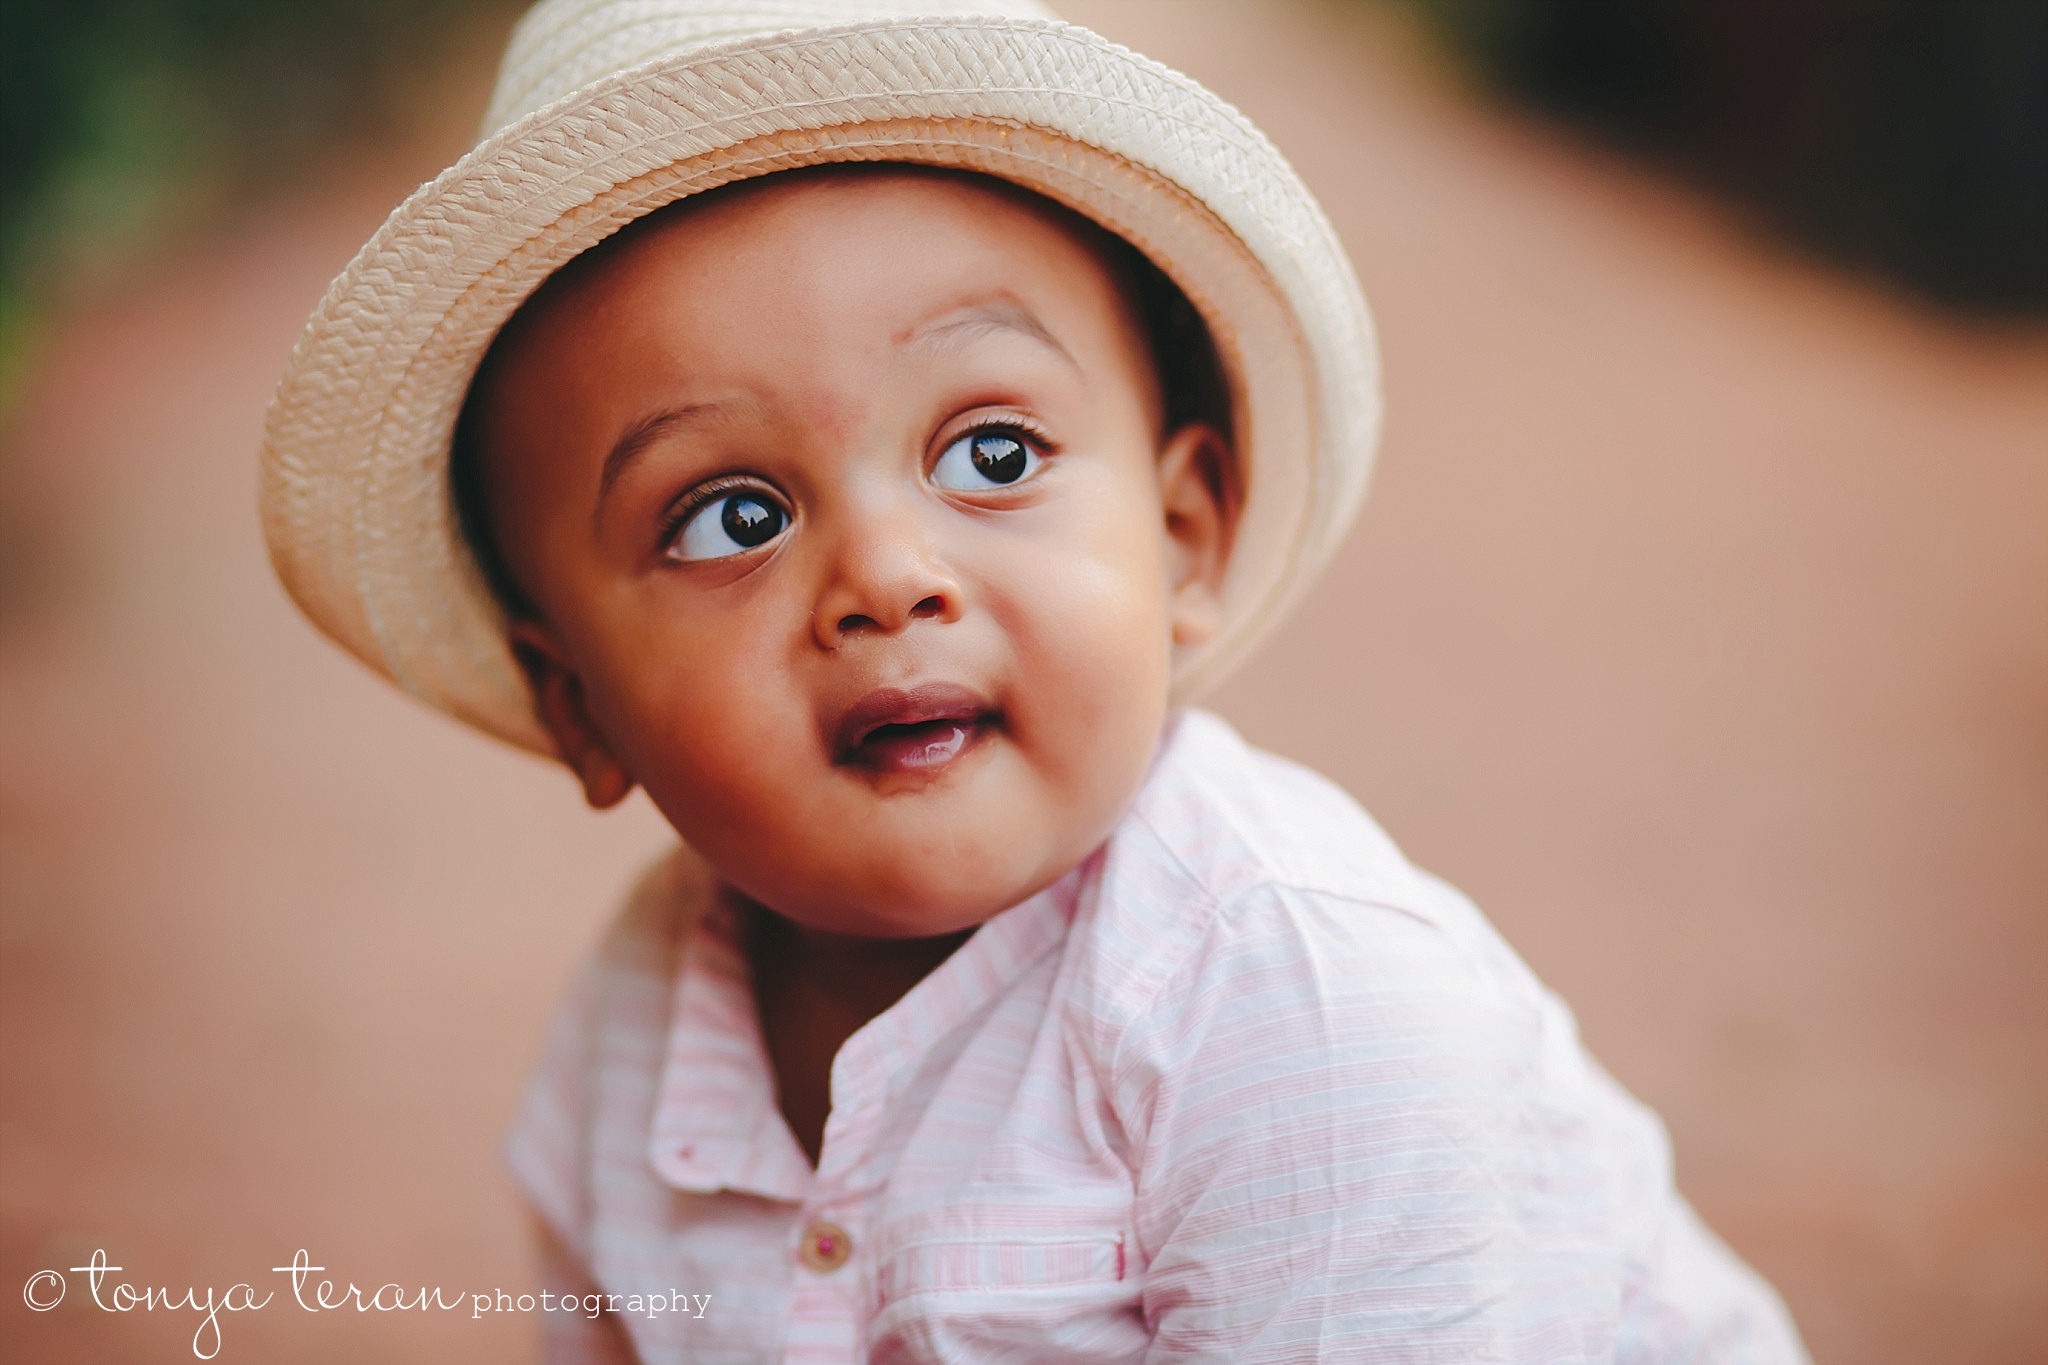 1st birthday Lifestyle Photo Session | Tonya Teran Photography, Washington, DC Newborn, Baby, and Family Photographer